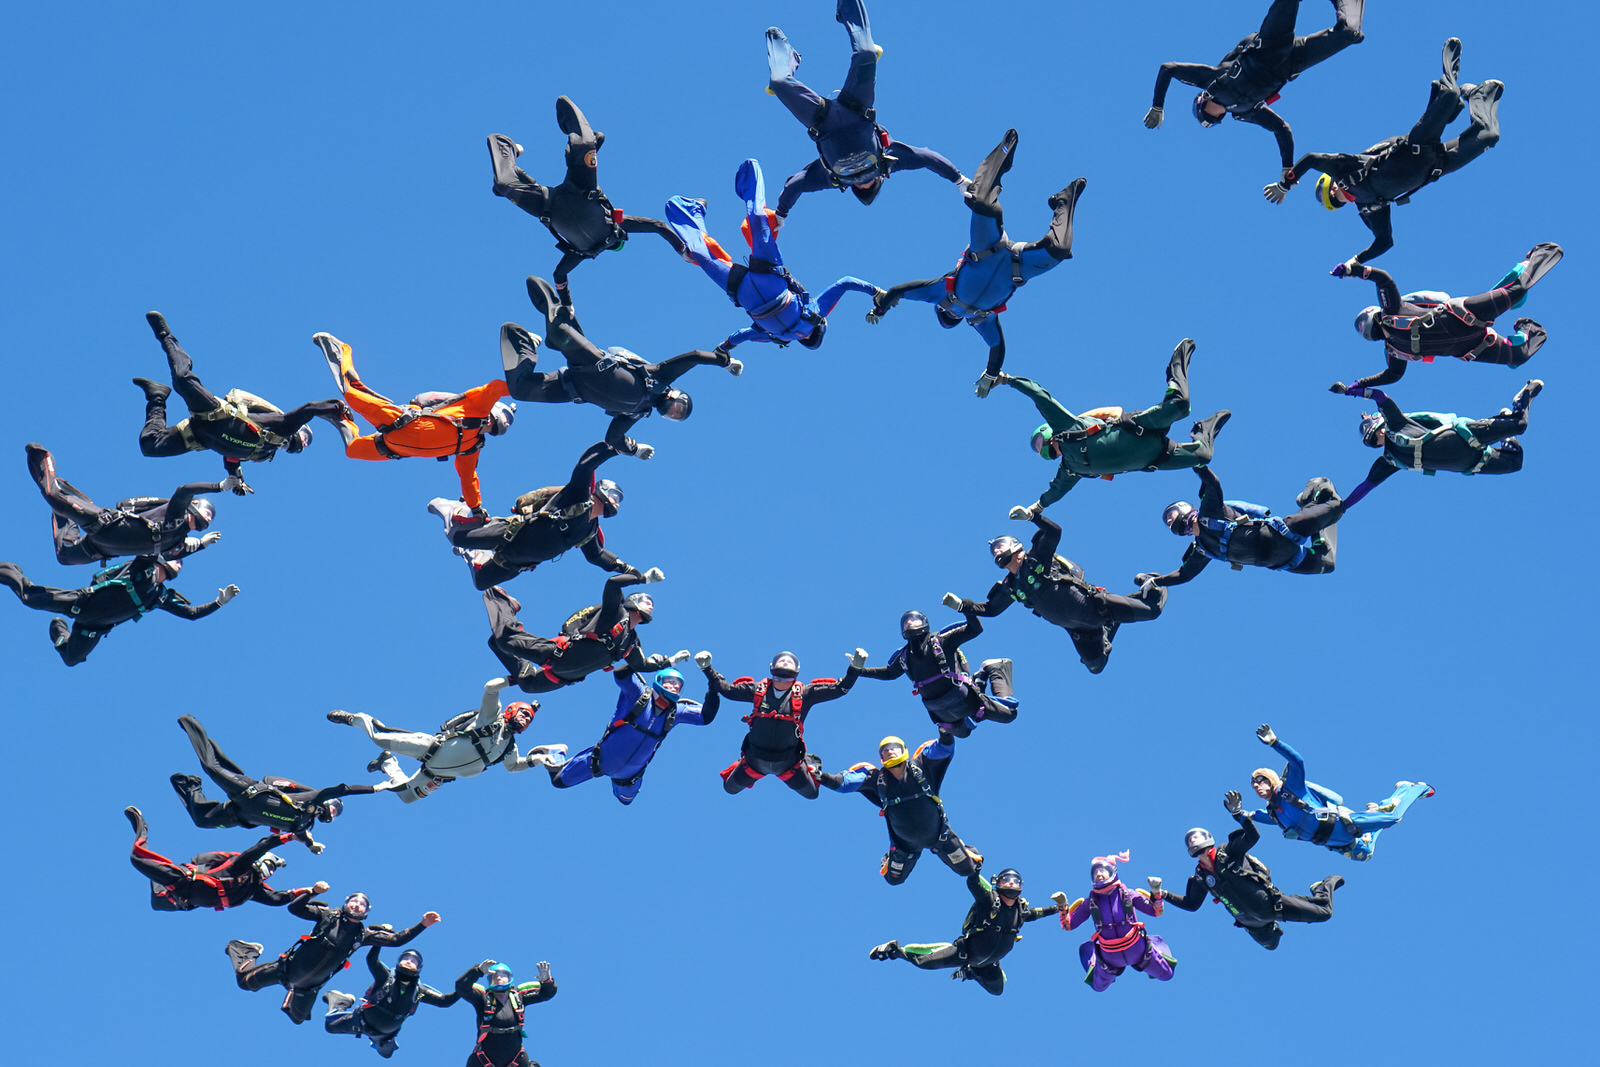 skydiving freefall speed